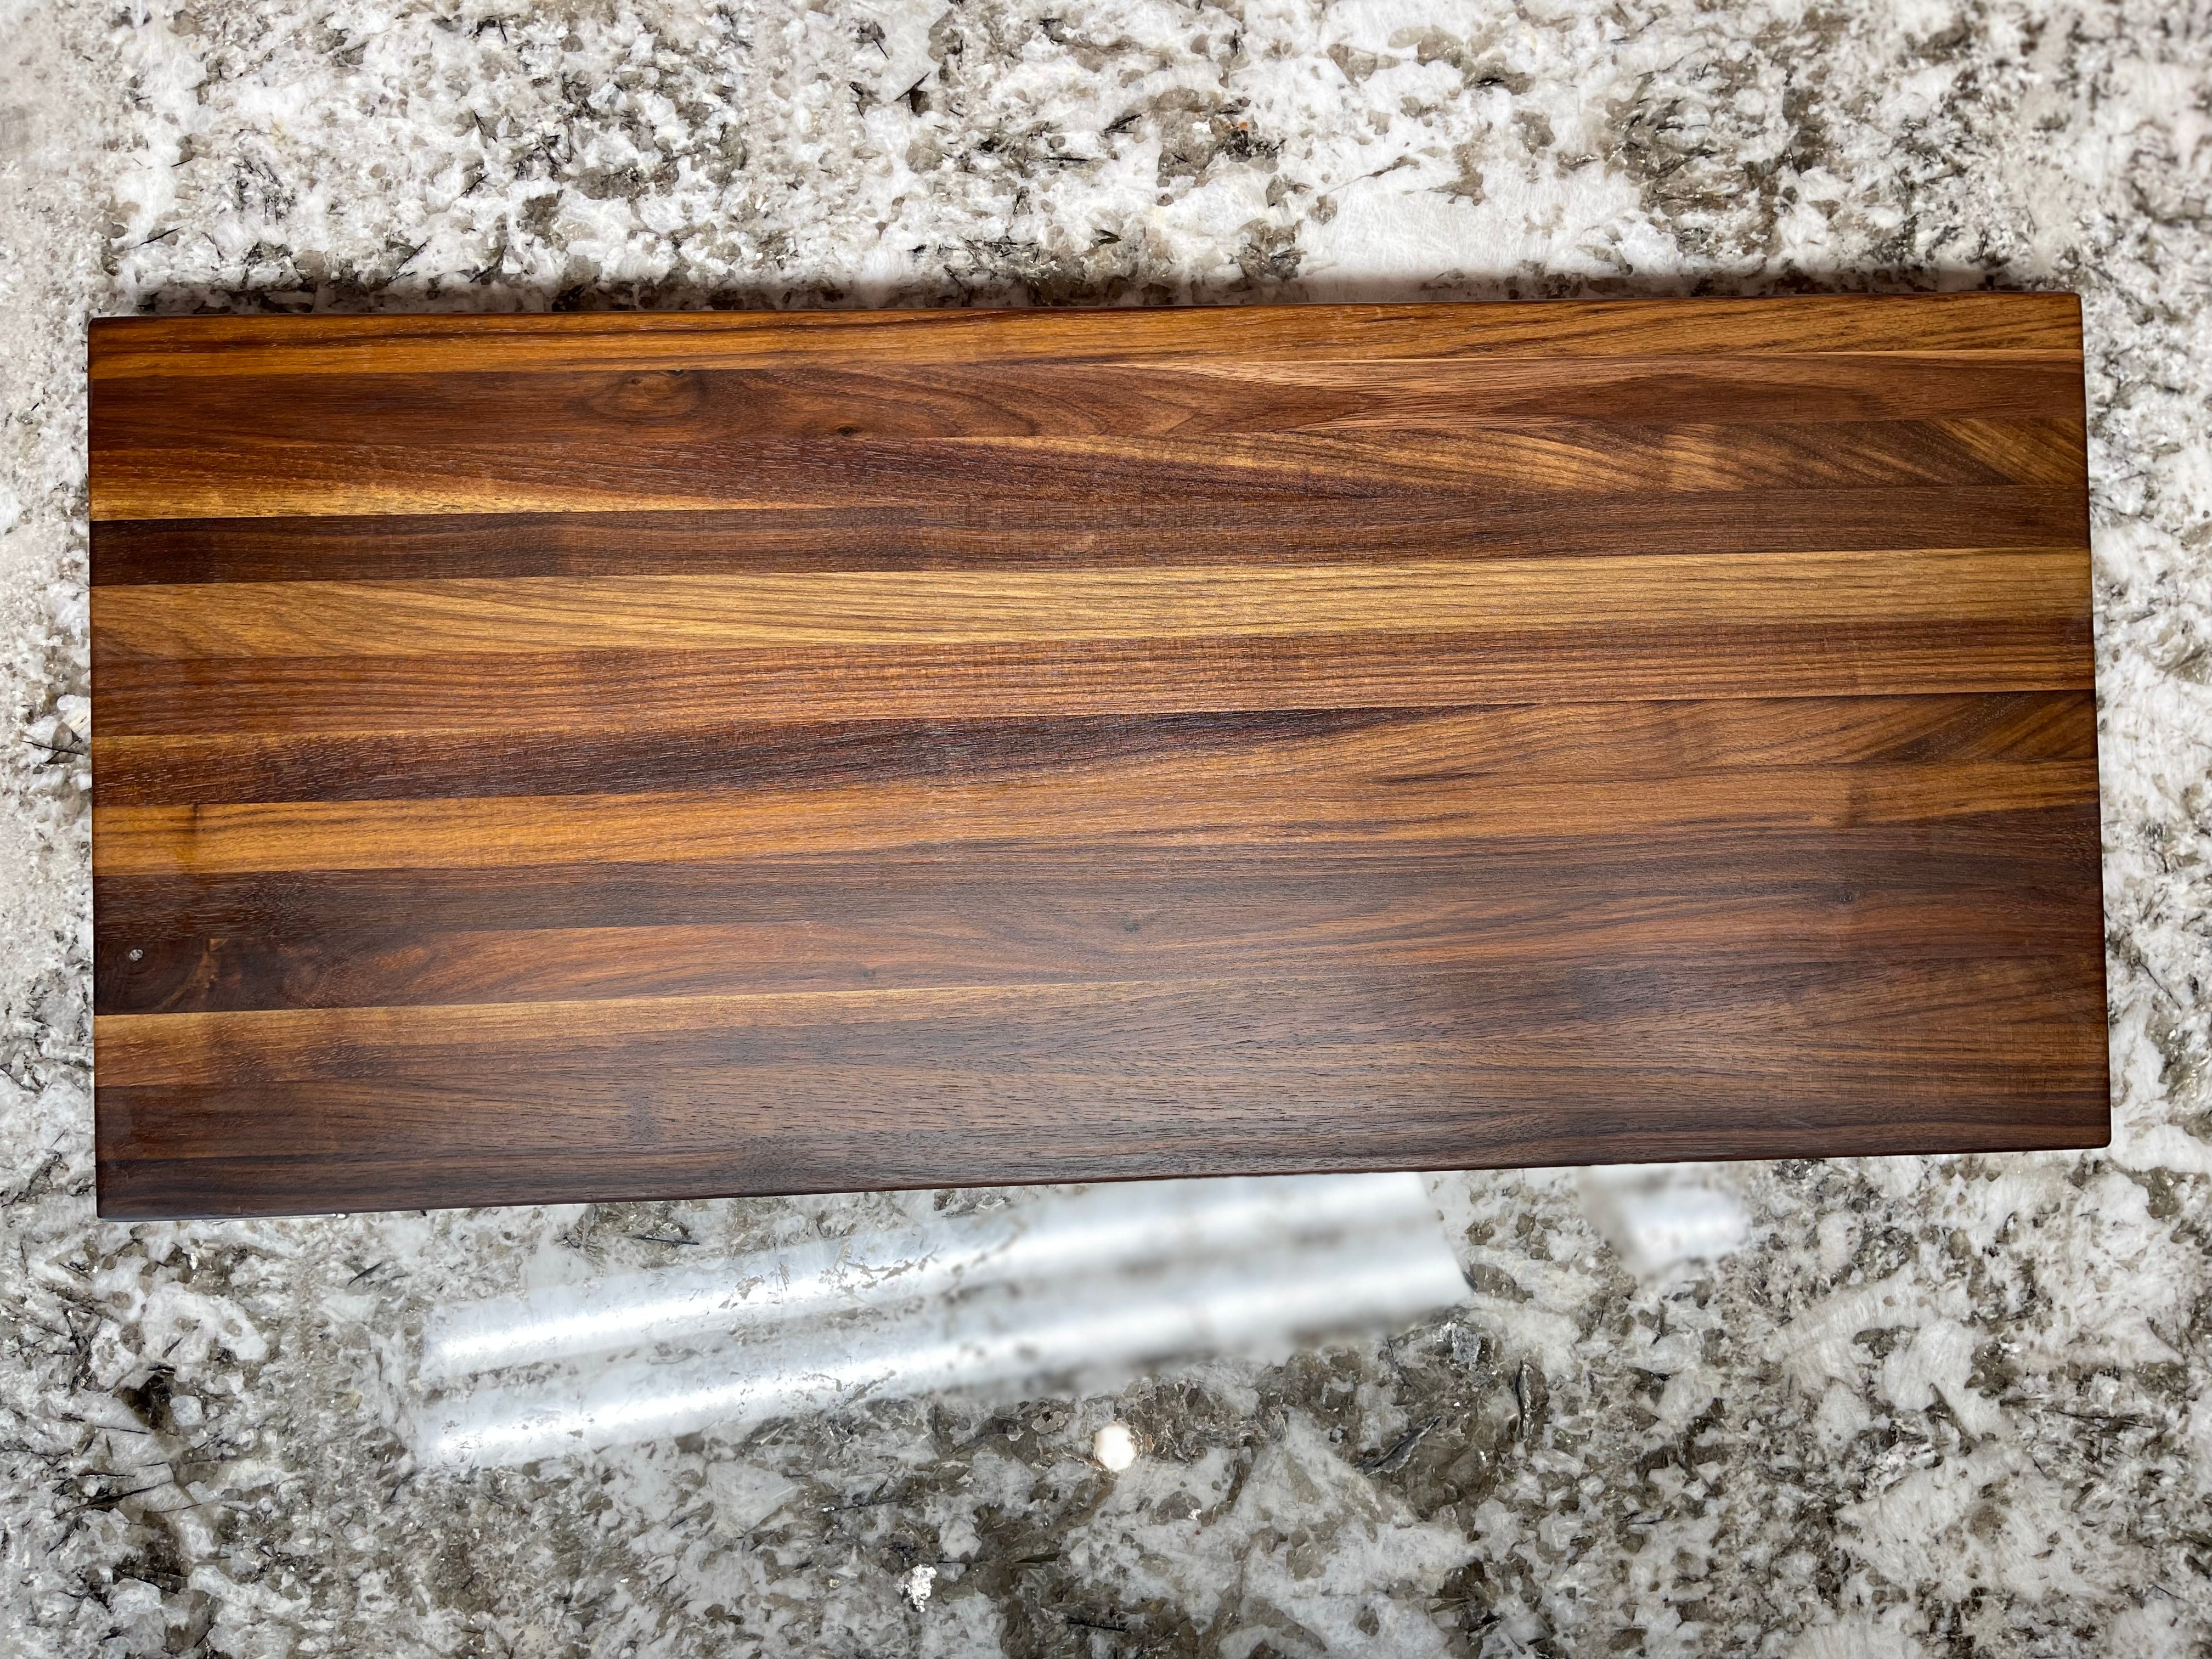 Edge grain cutting board